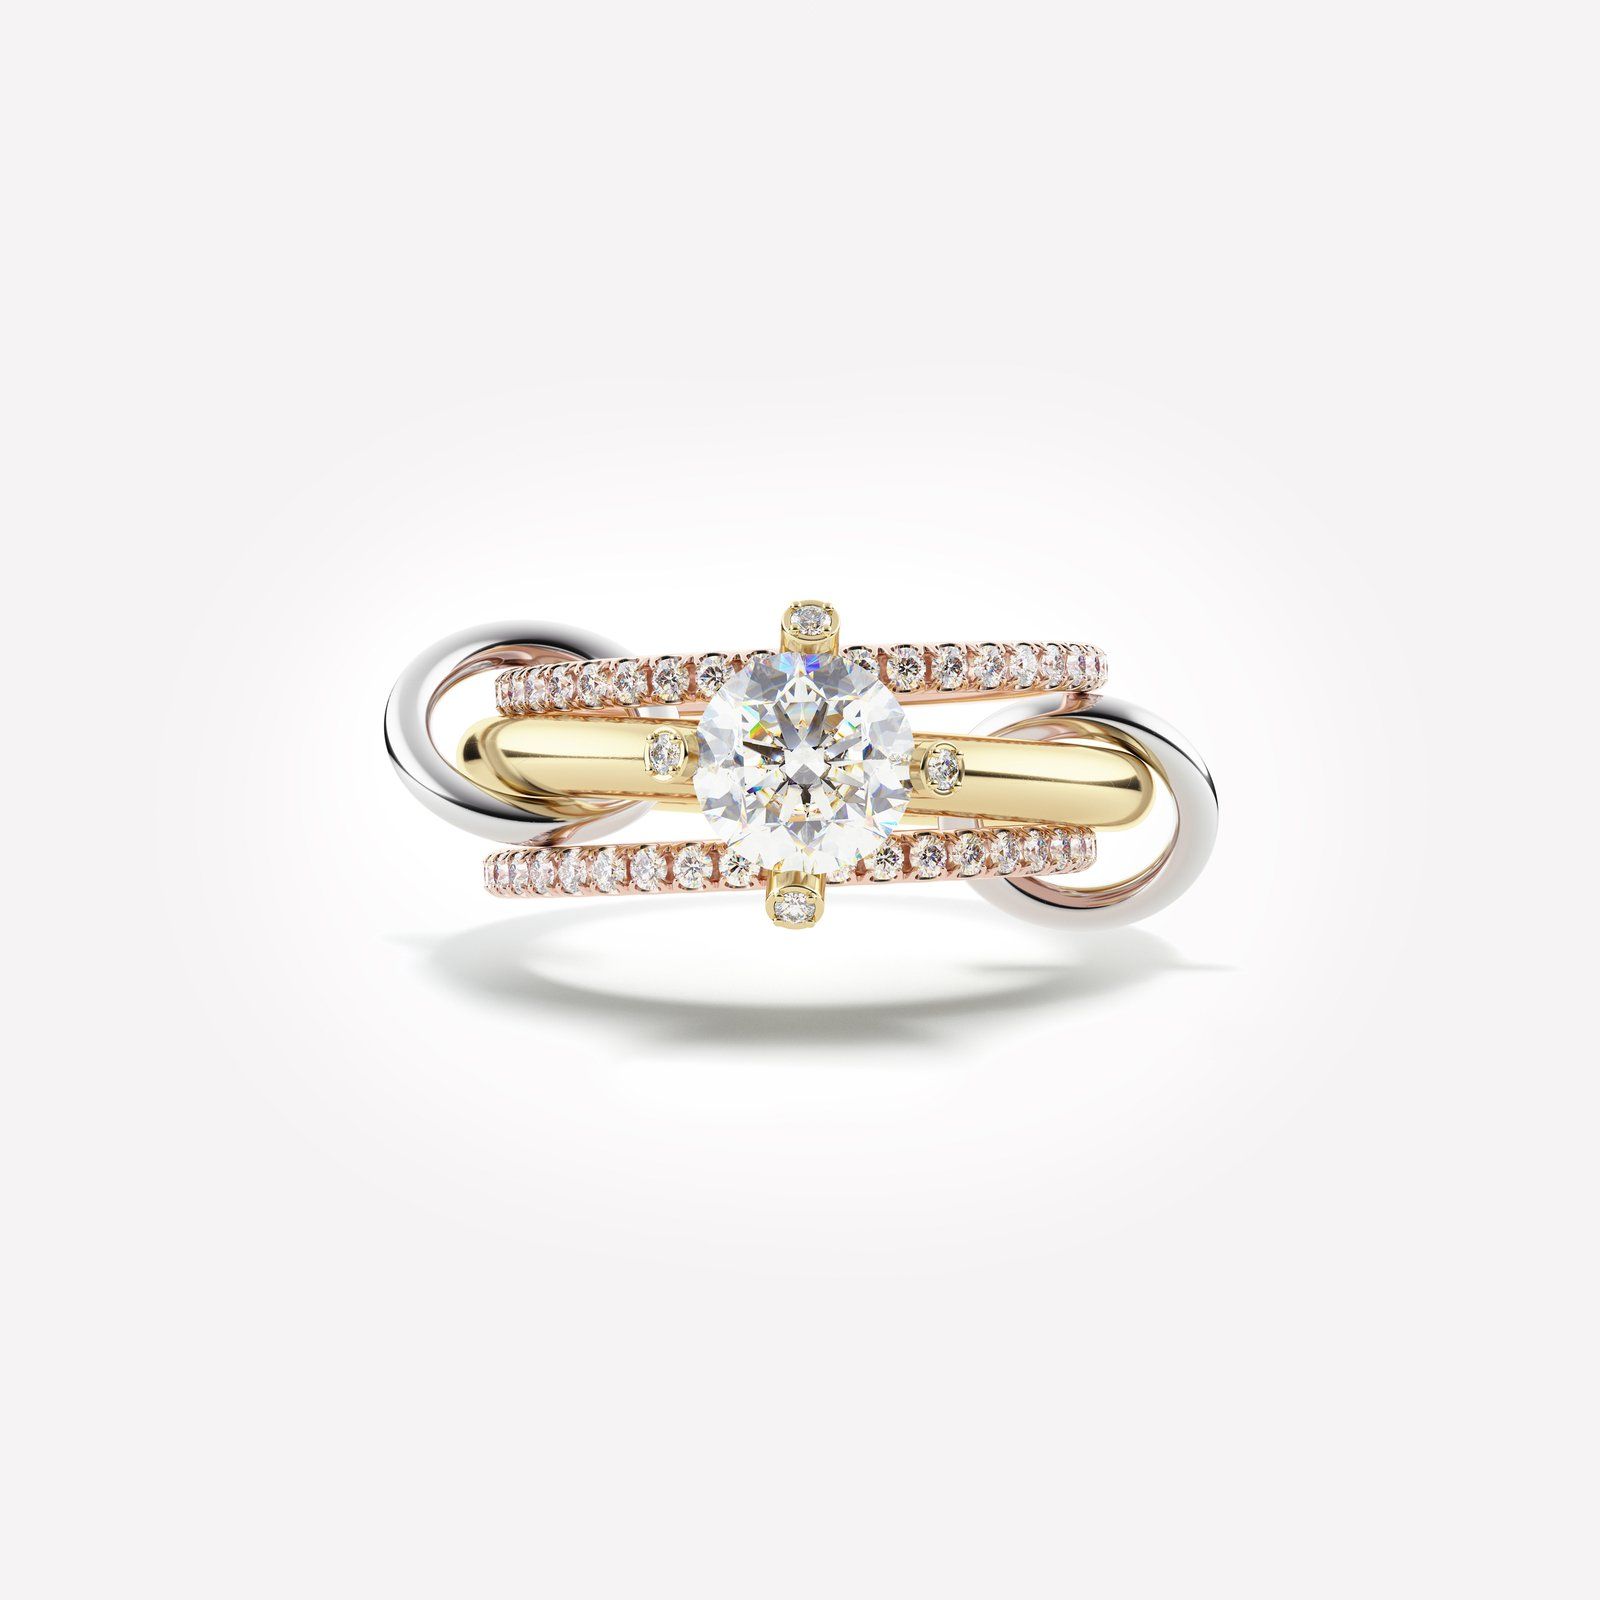 Garnet Wedding Band, Garnet Wedding Ring, Vintage Engraved Ring,  Anniversary Ring, 14K White Gold Antique Style Unique Handmade 0.38 Carat